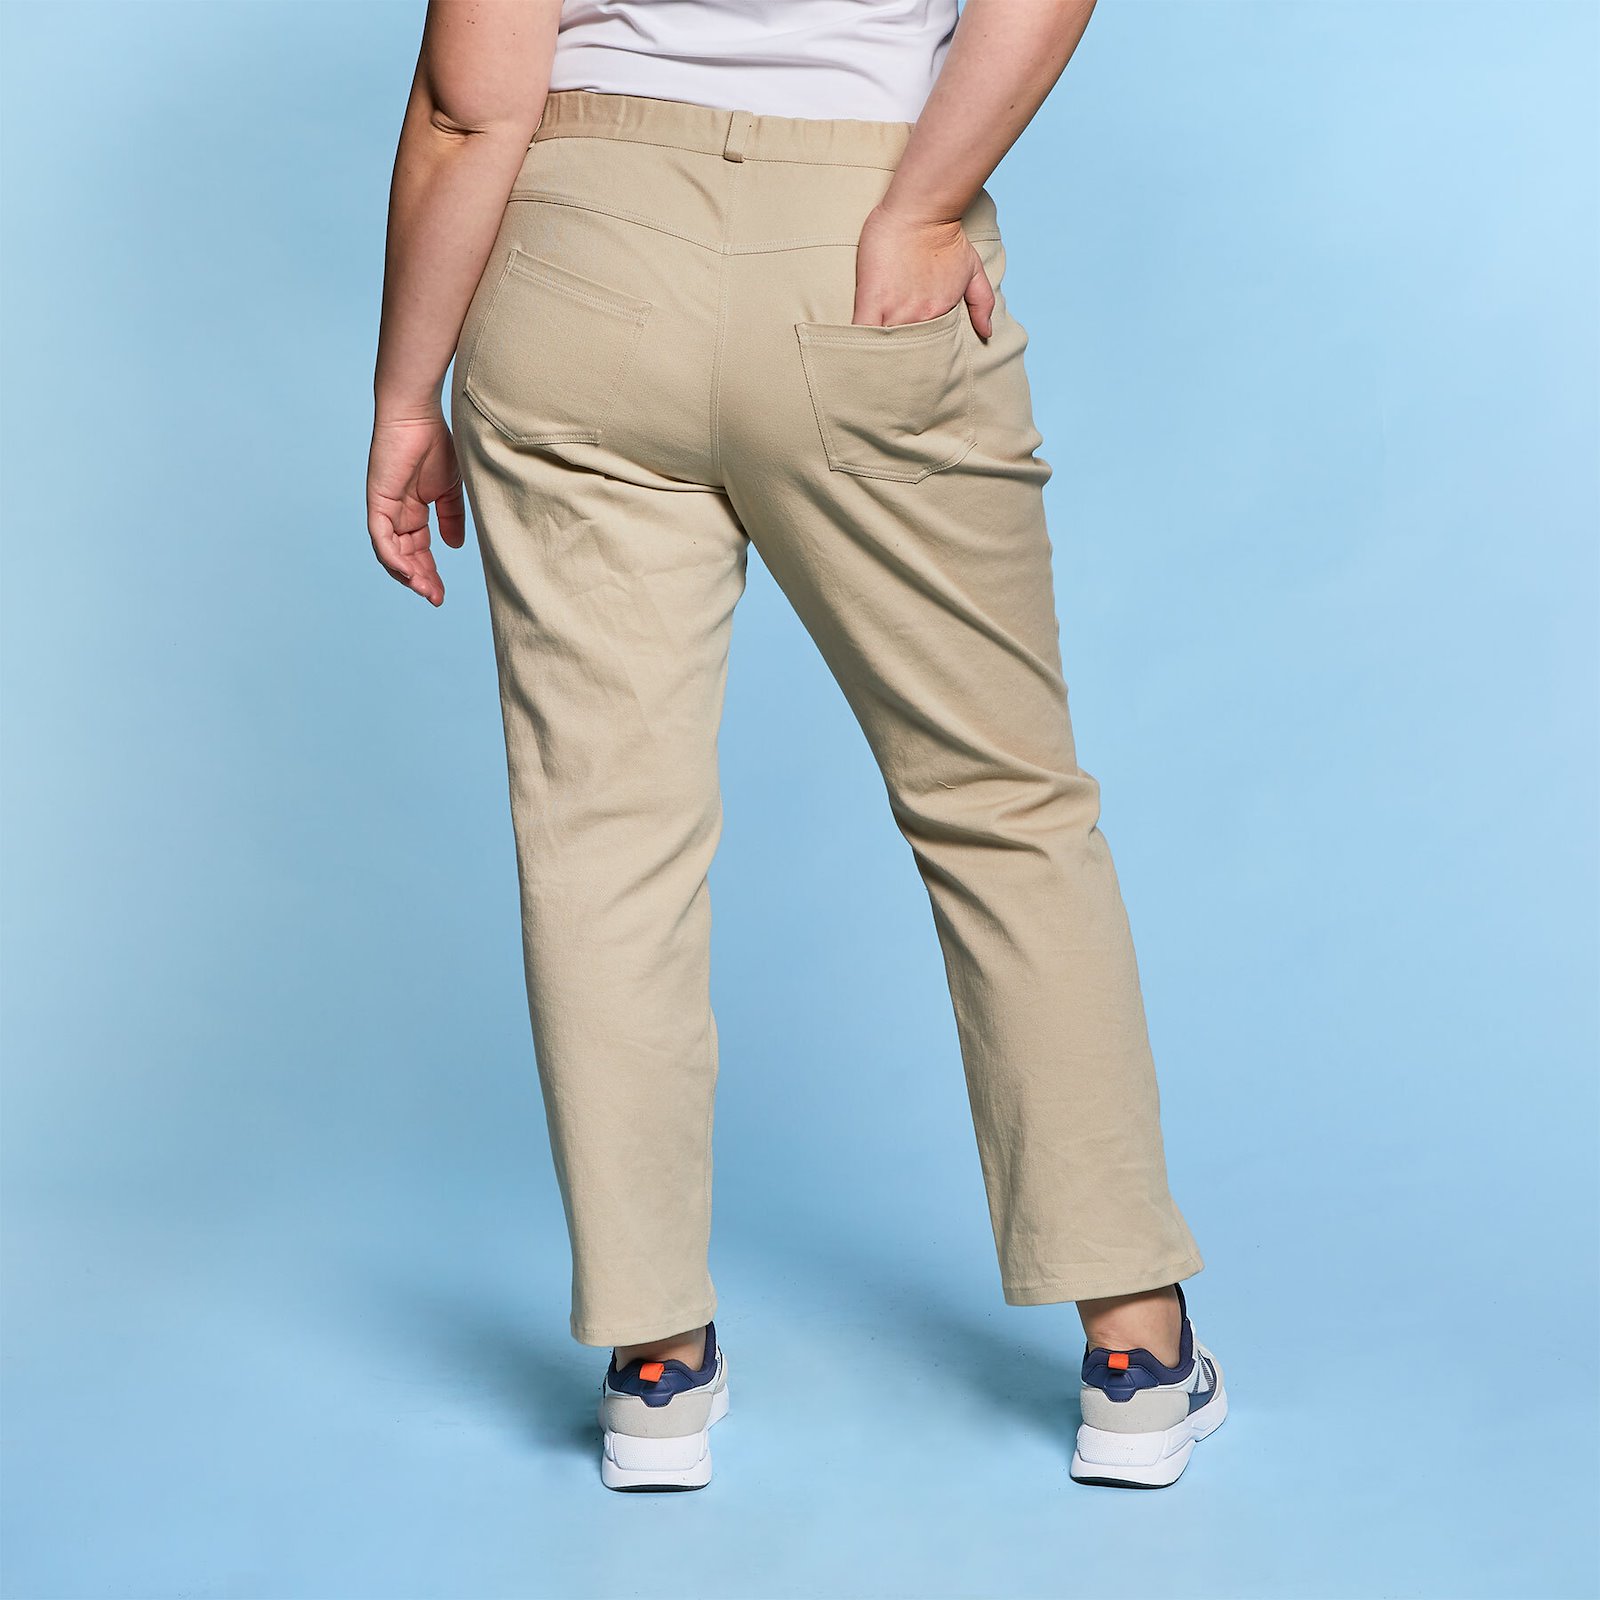 Classic jeans w. elastic waistban, 48/20 p70007000_p70007001_p70007002_p70007003_p70007004_pack_e